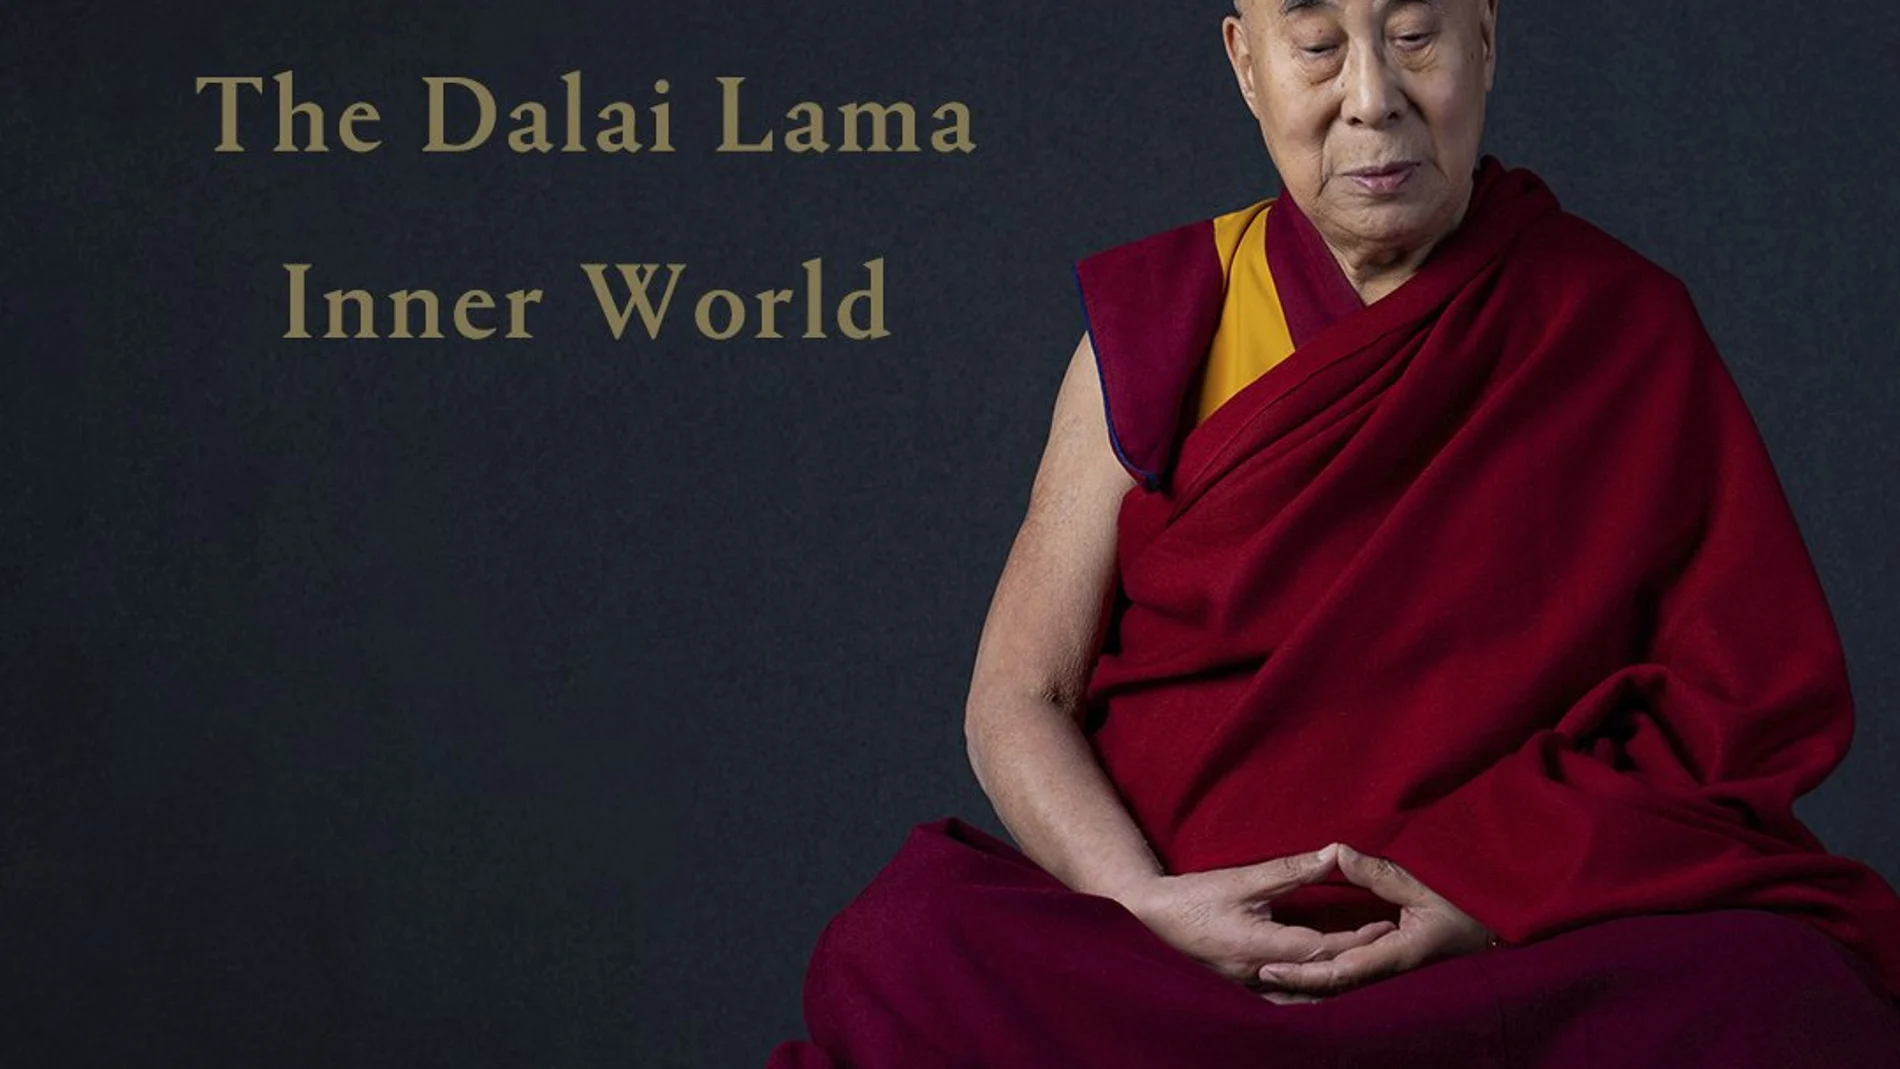 La portada del disco del Dalai Lama, "Inner World"